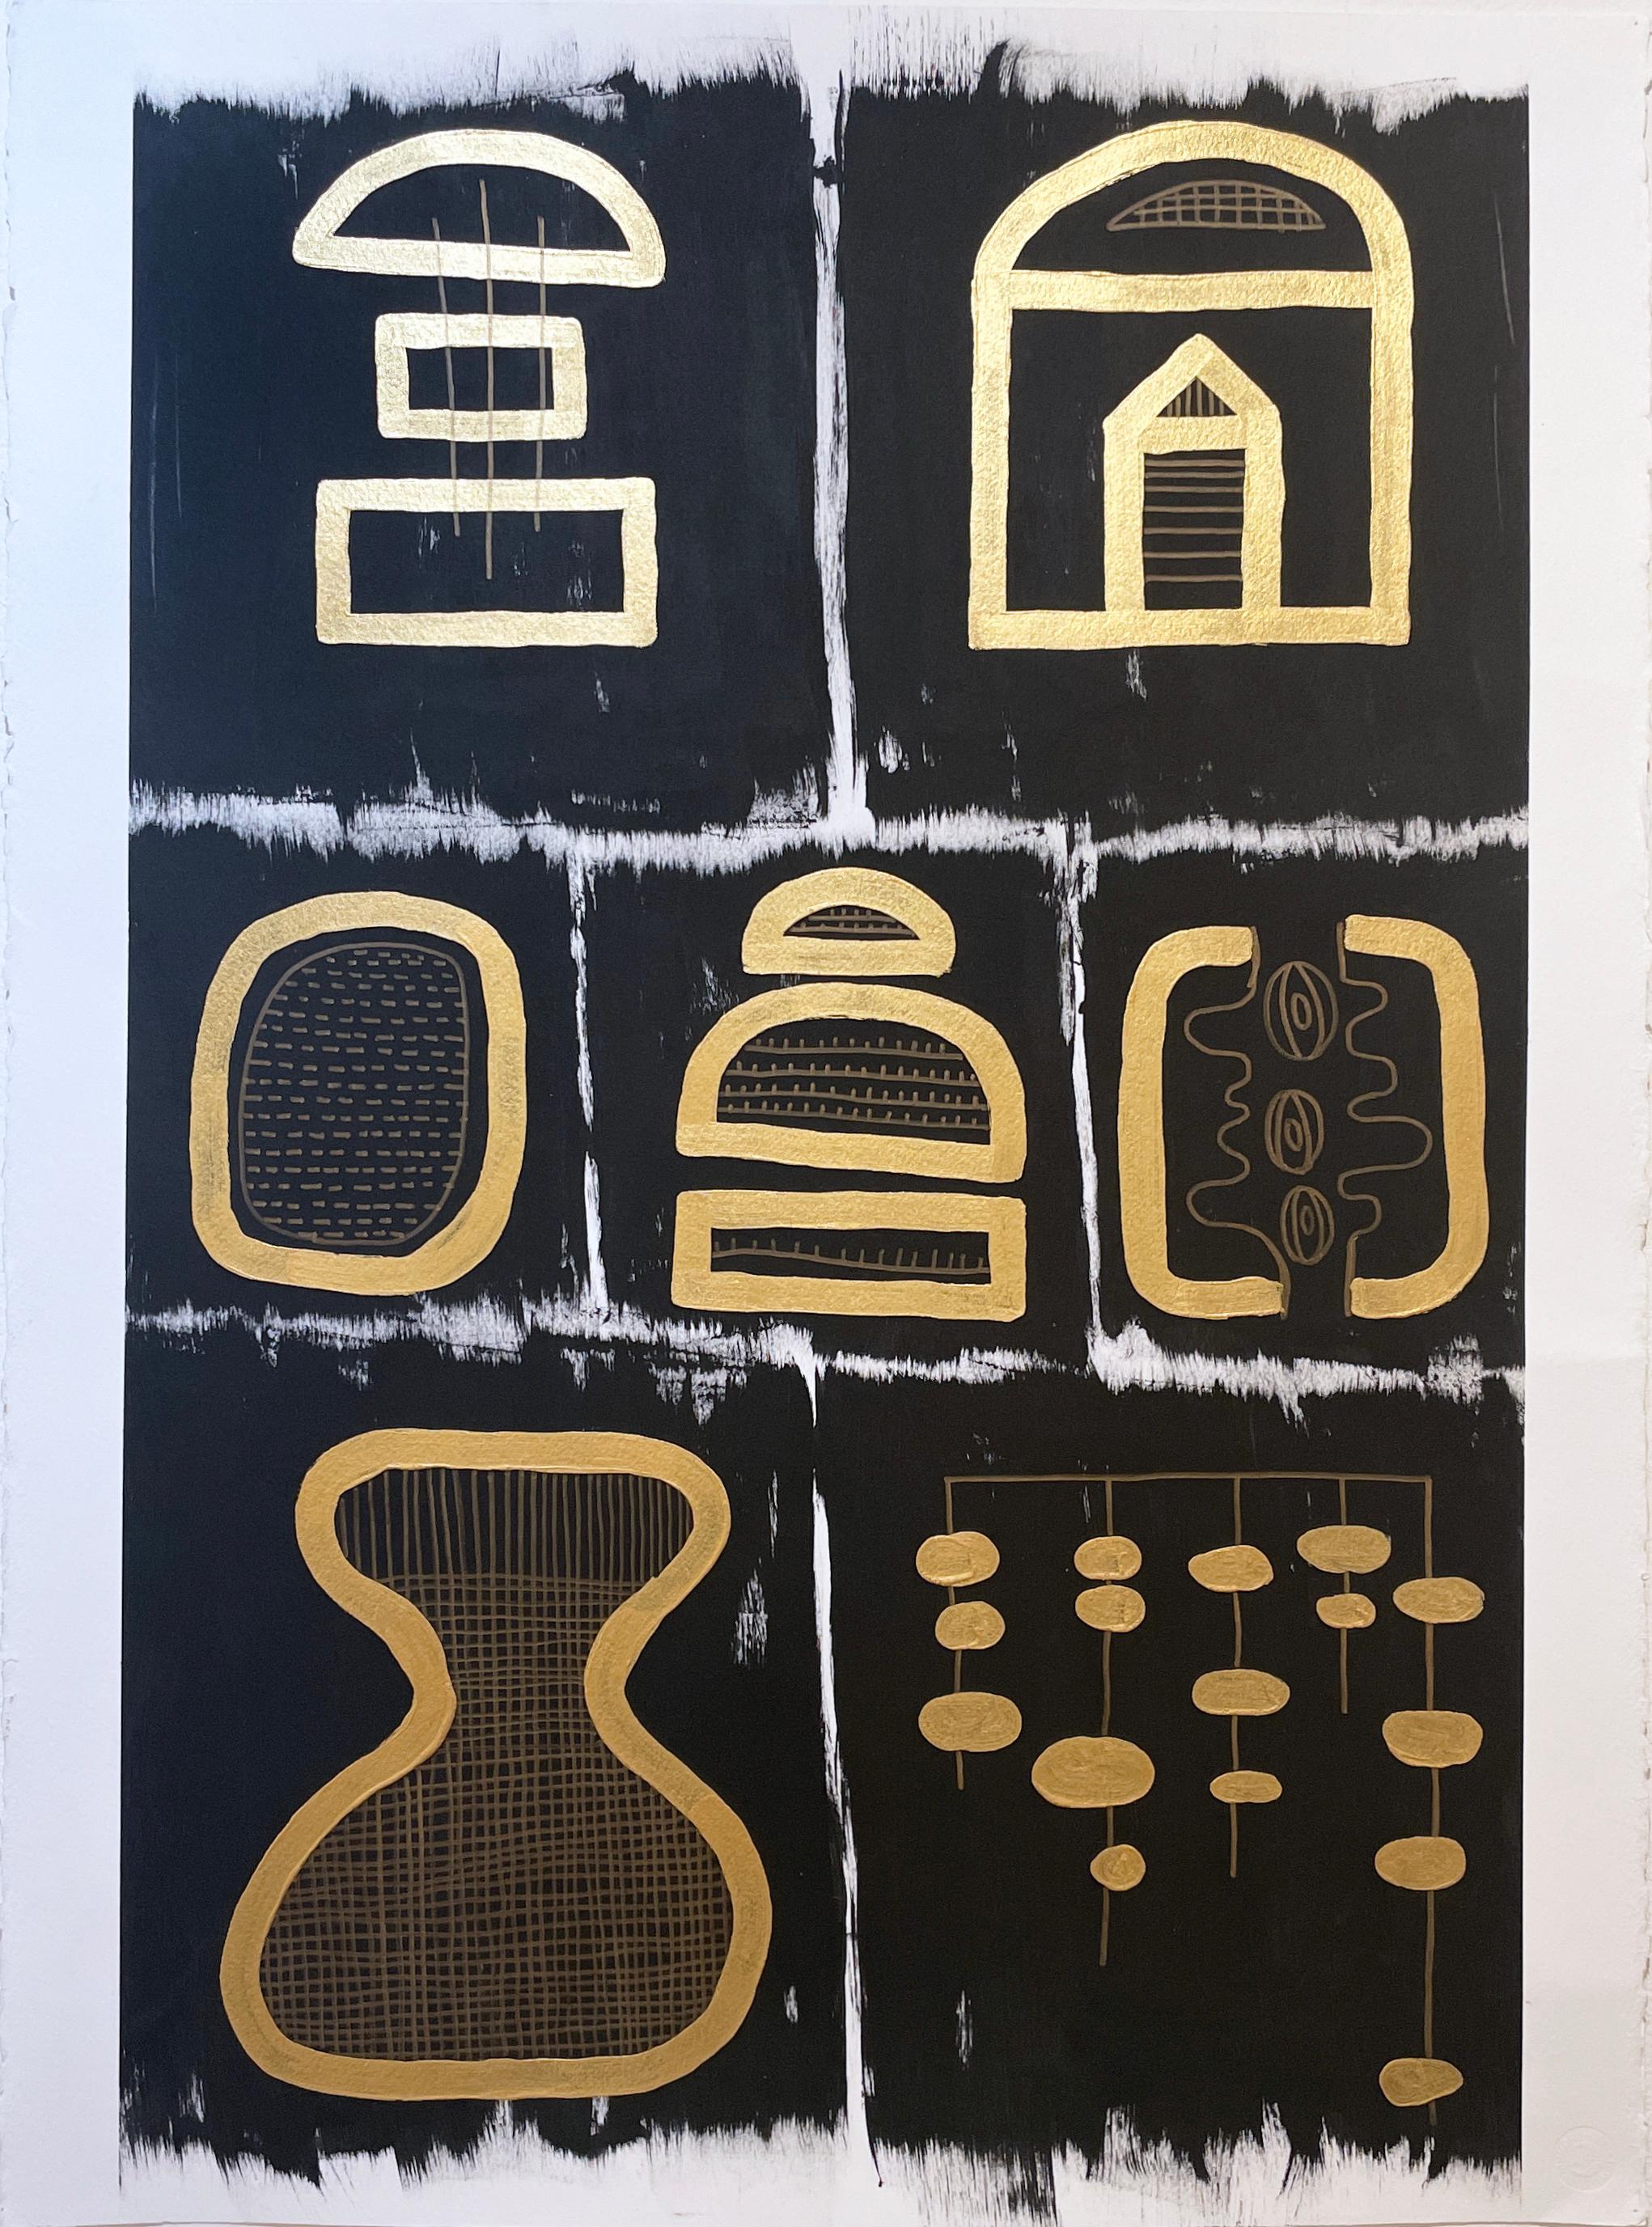 Black & Gold Glyphs I by Cheryl R. Riley, metallic abstract geometric symbols